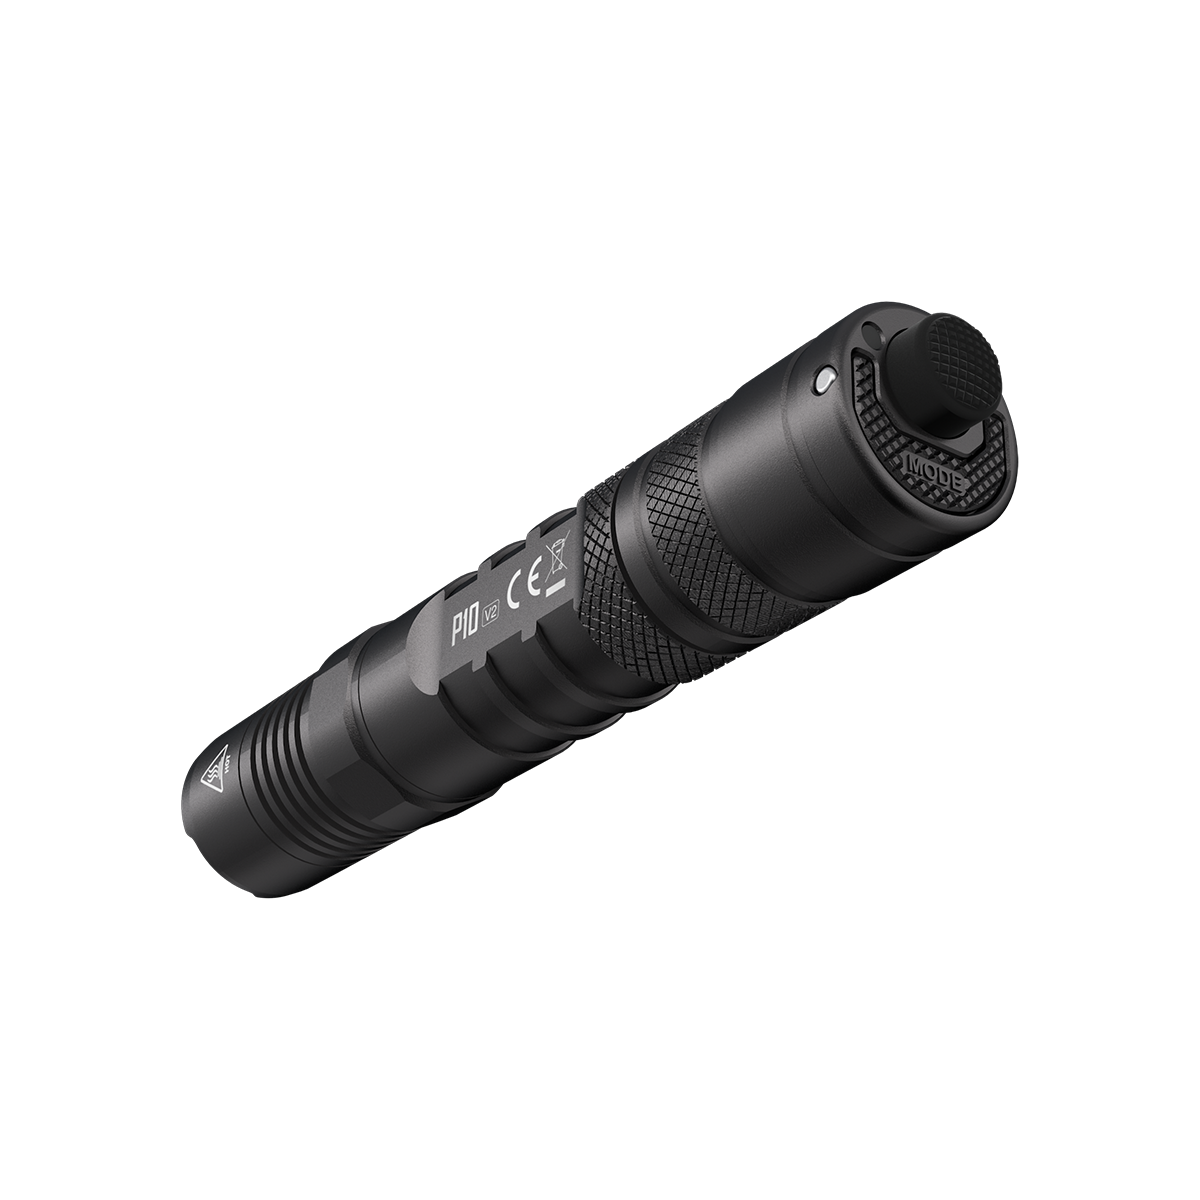 Nitecore P10 v2 tactical flashlight review